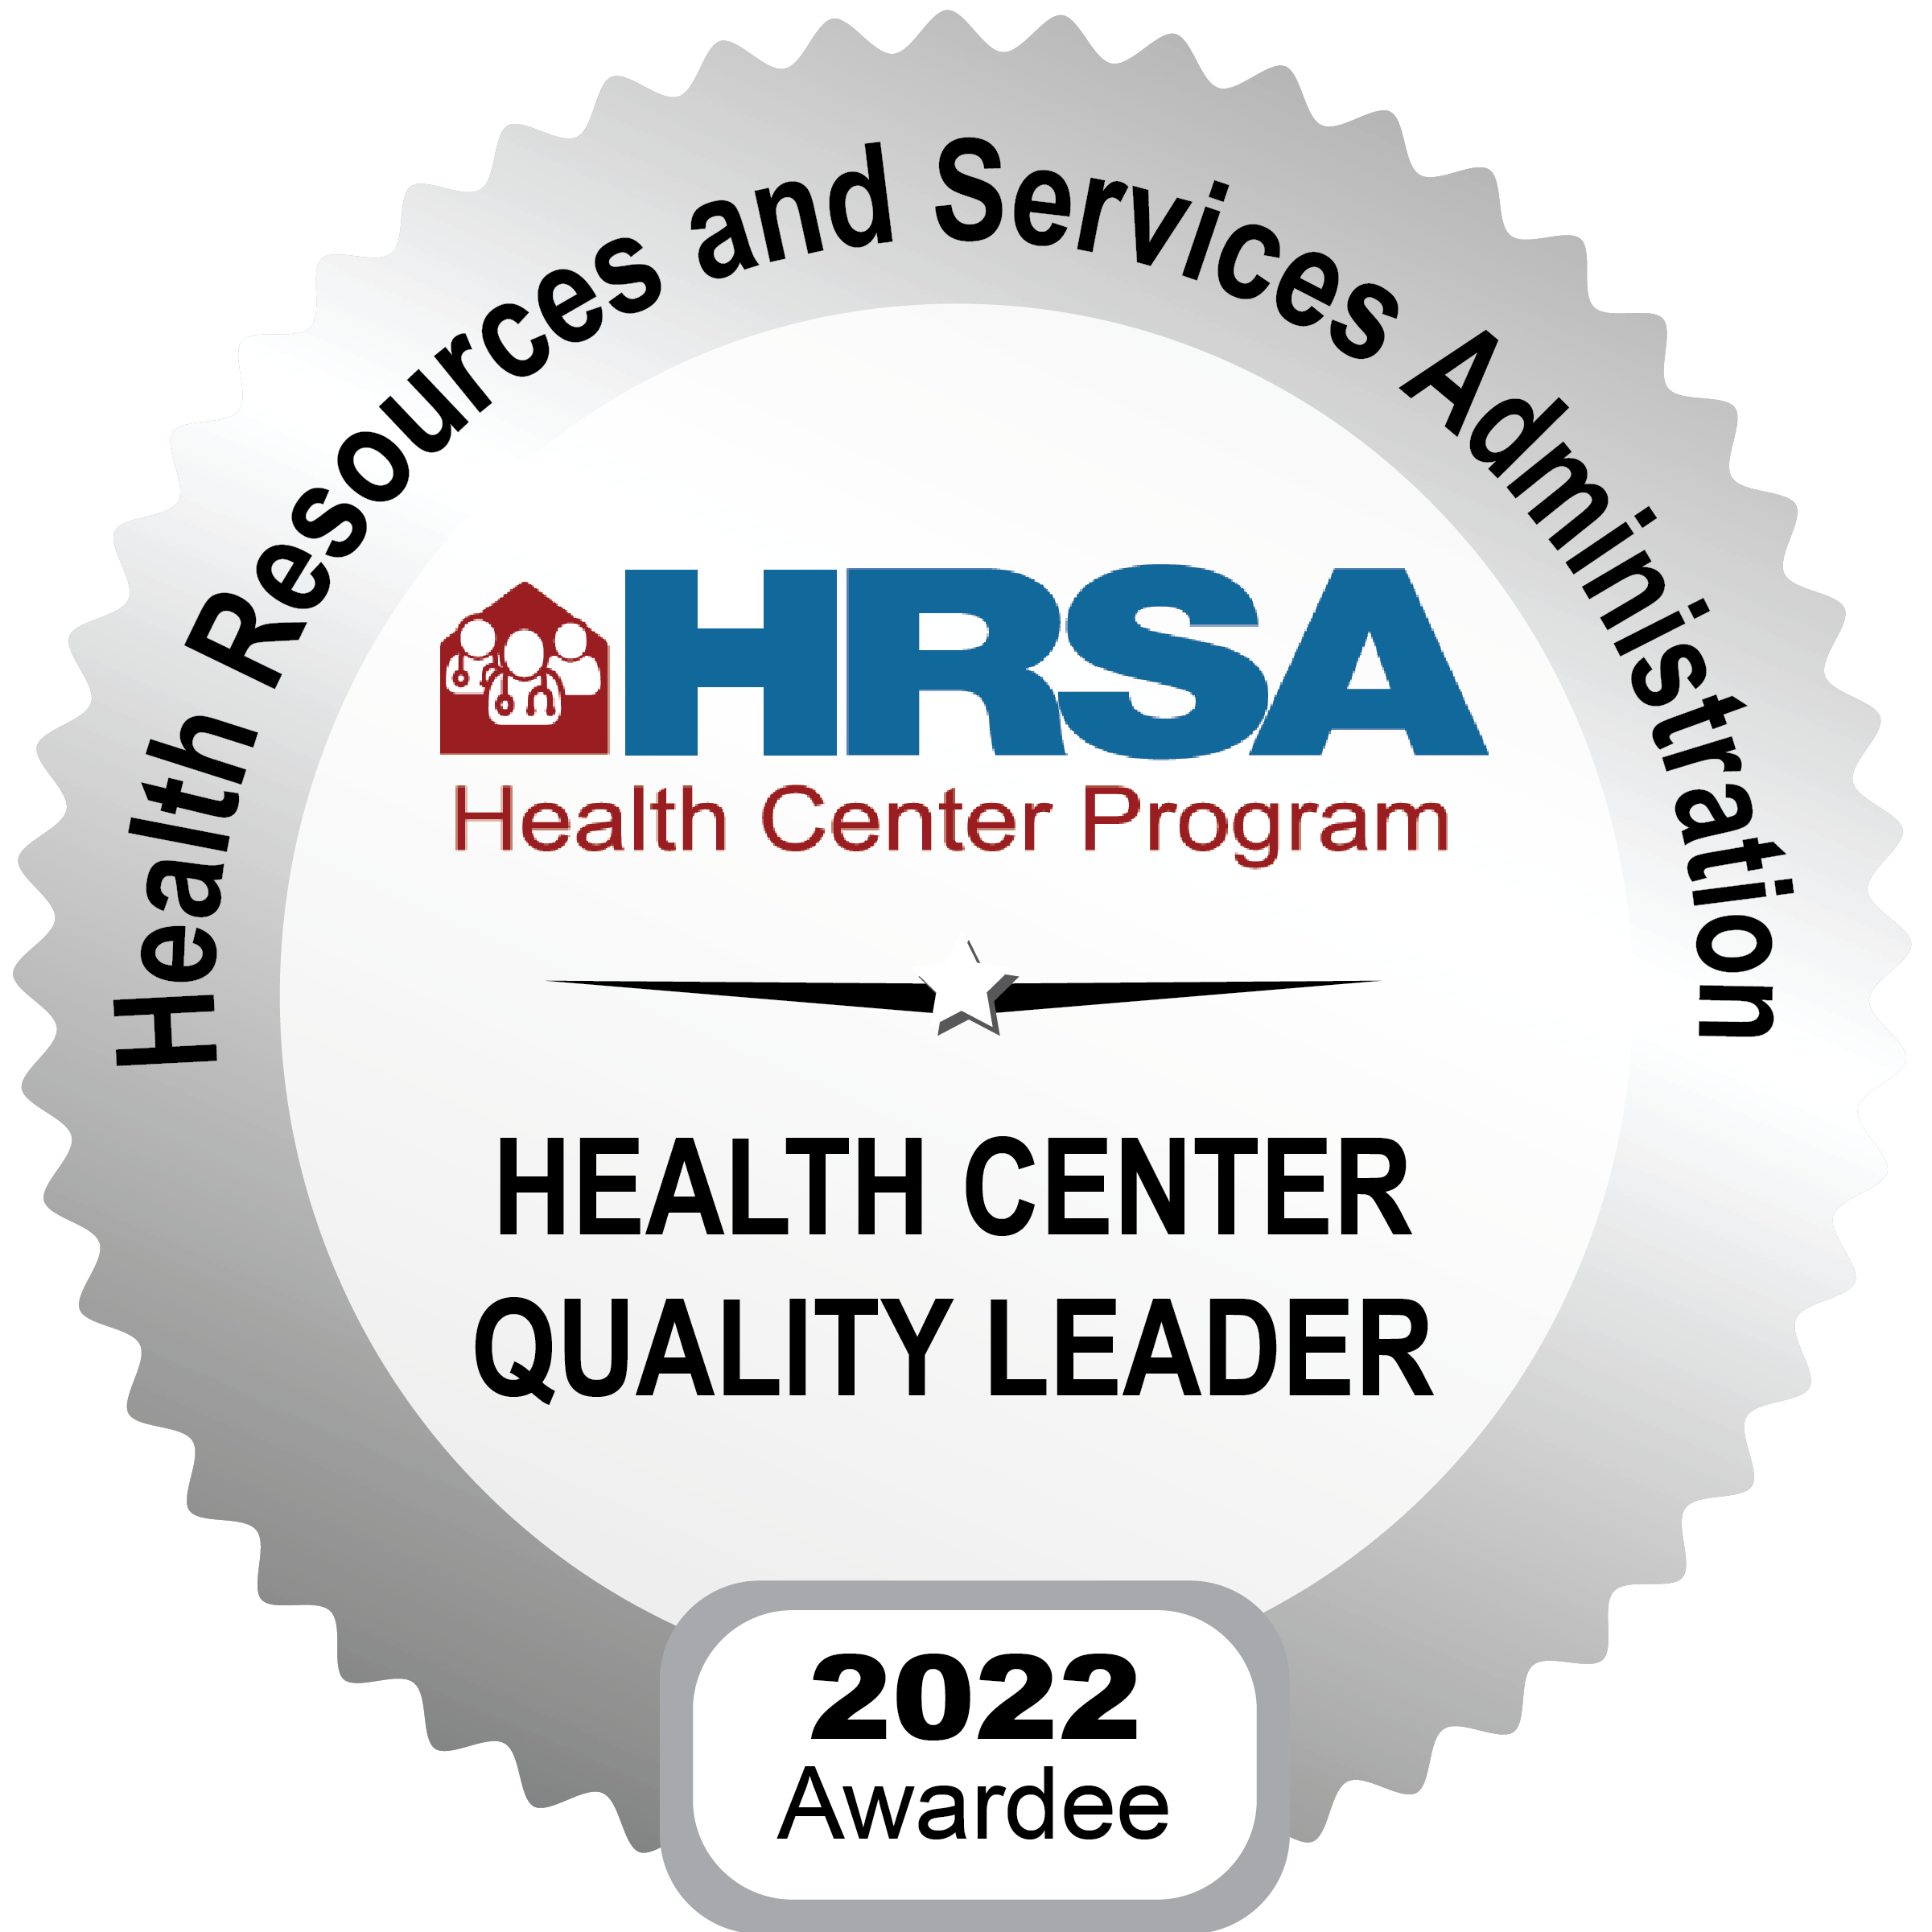 HRSA Health Center Quality Leader 2022 Award